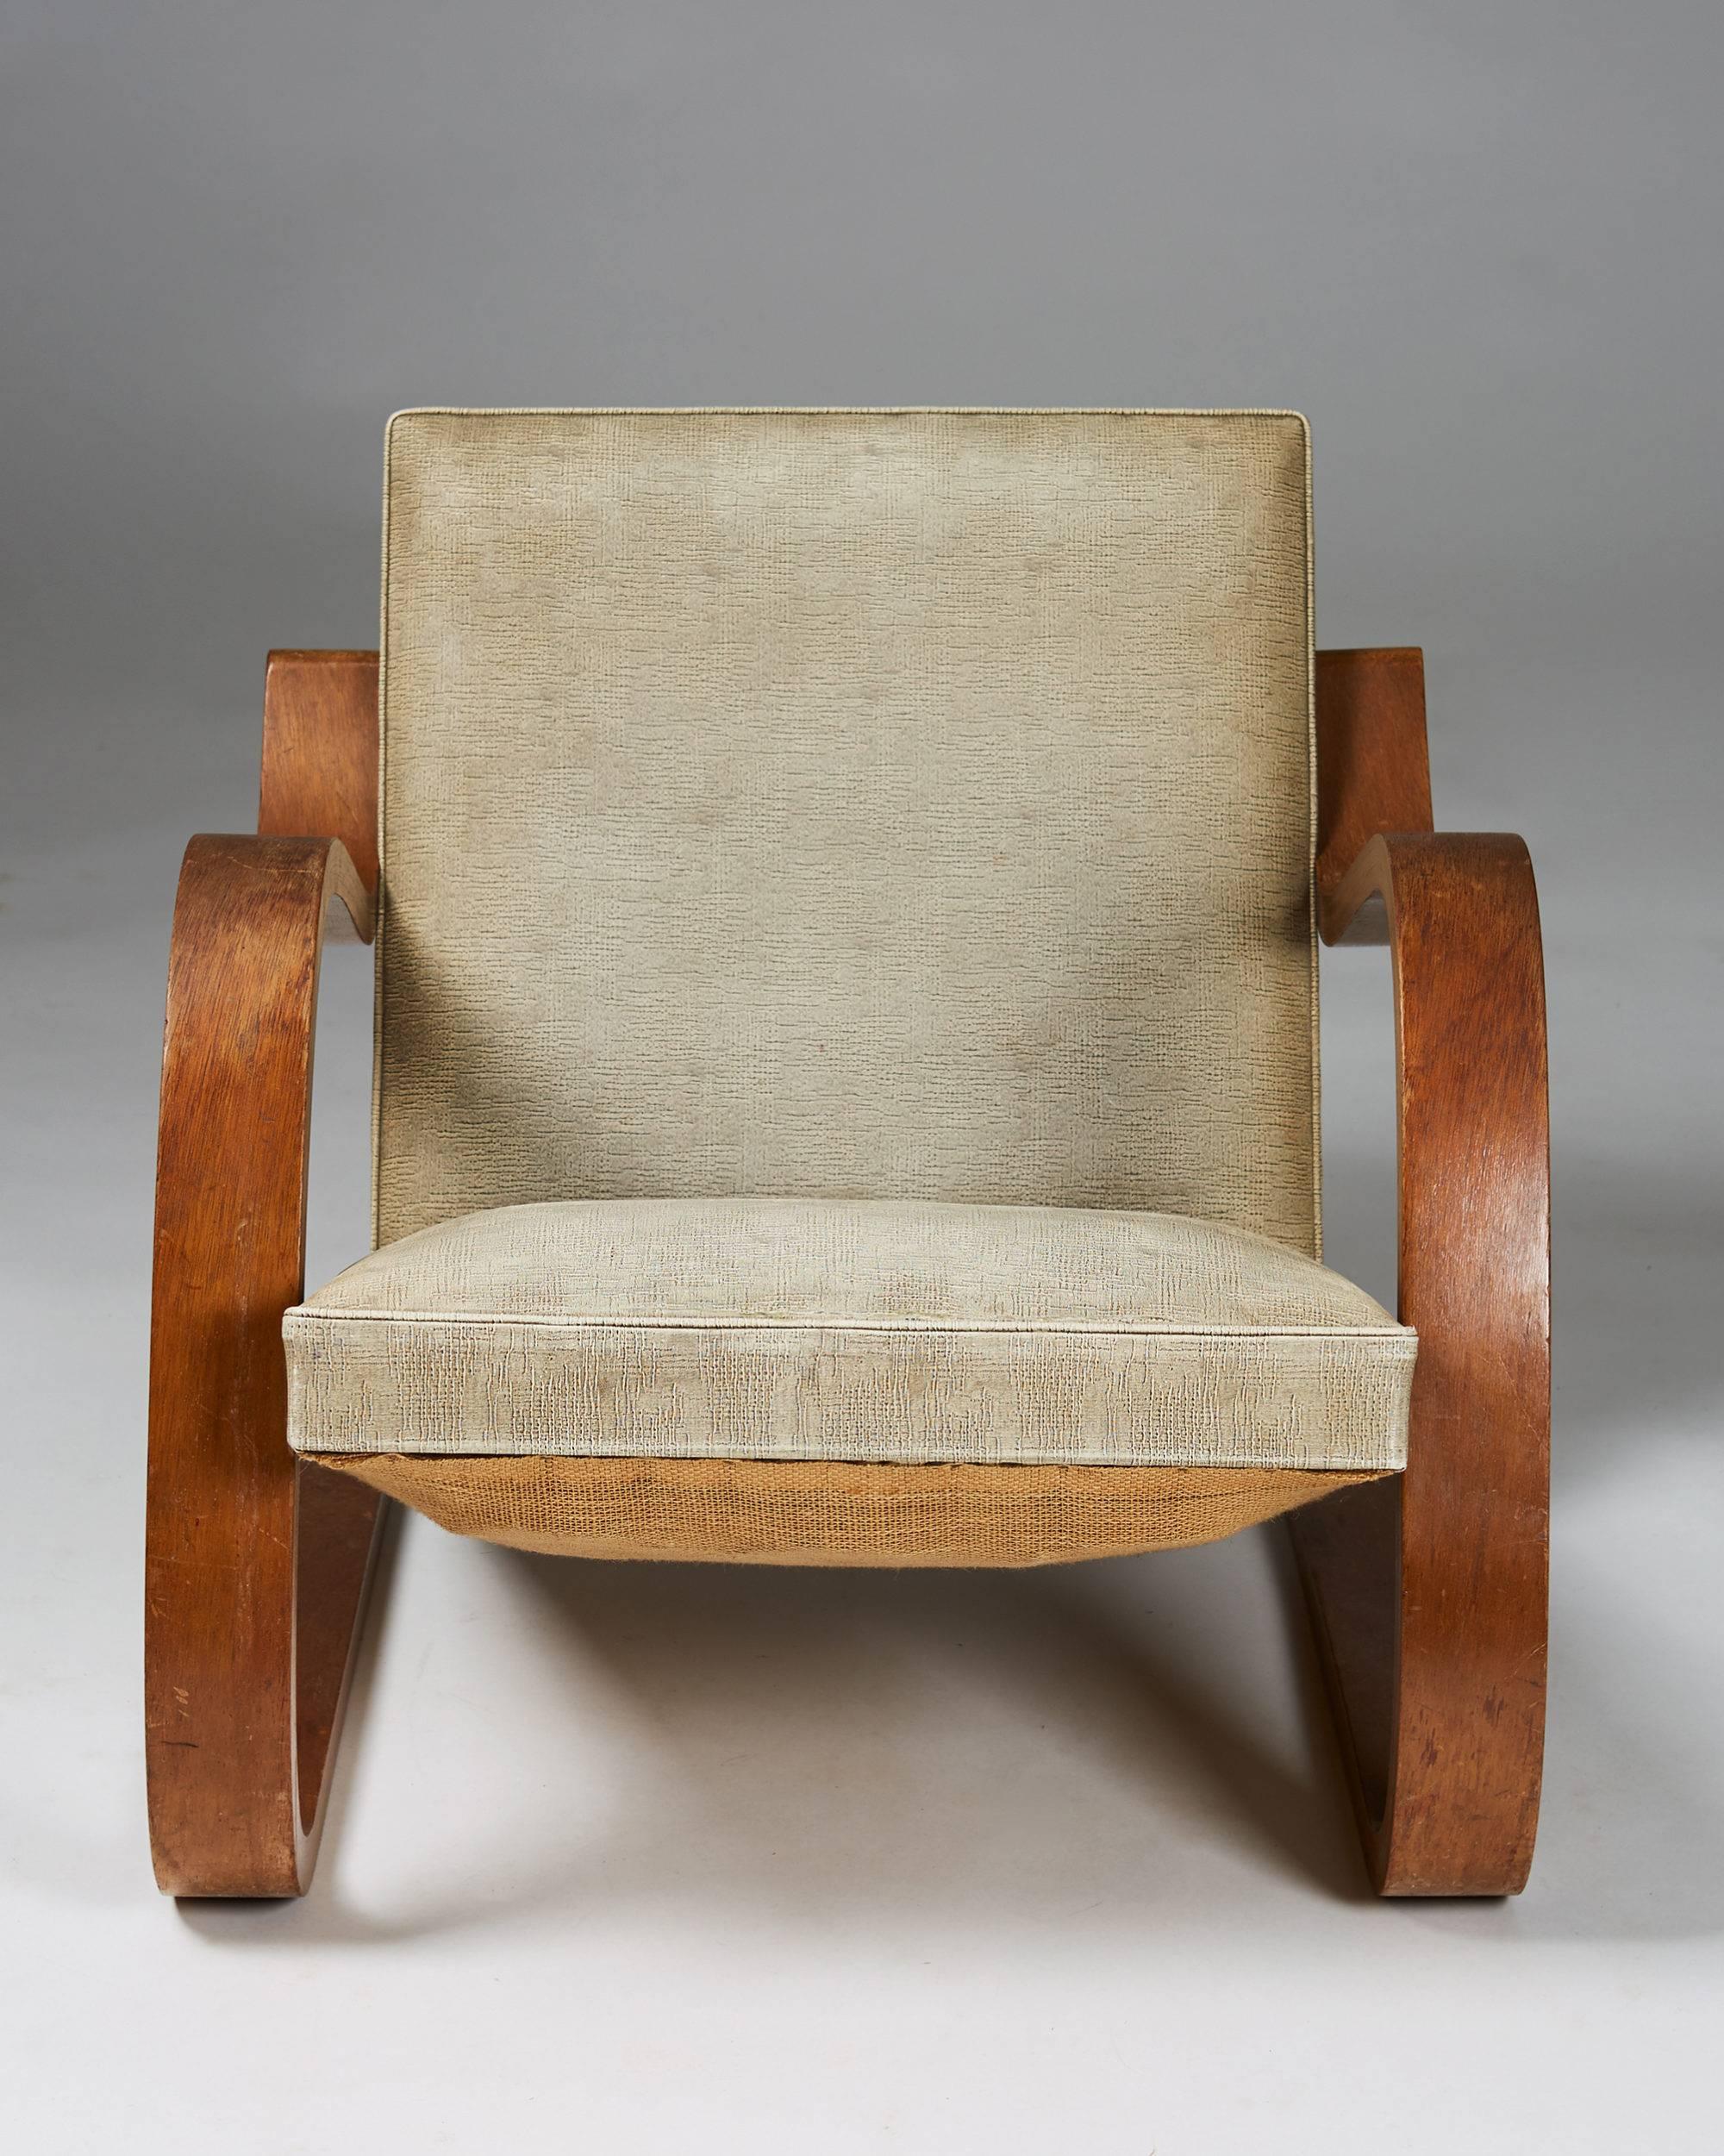 Armchair designed by Alvar Aalto for Artek, Finland, 1930s.
Laminated birch, original skai upholstery.

Measures: H: 70 cm/ 27 1/2''
W: 61 cm/ 24''
D: 73 cm/ 28 3/4''.